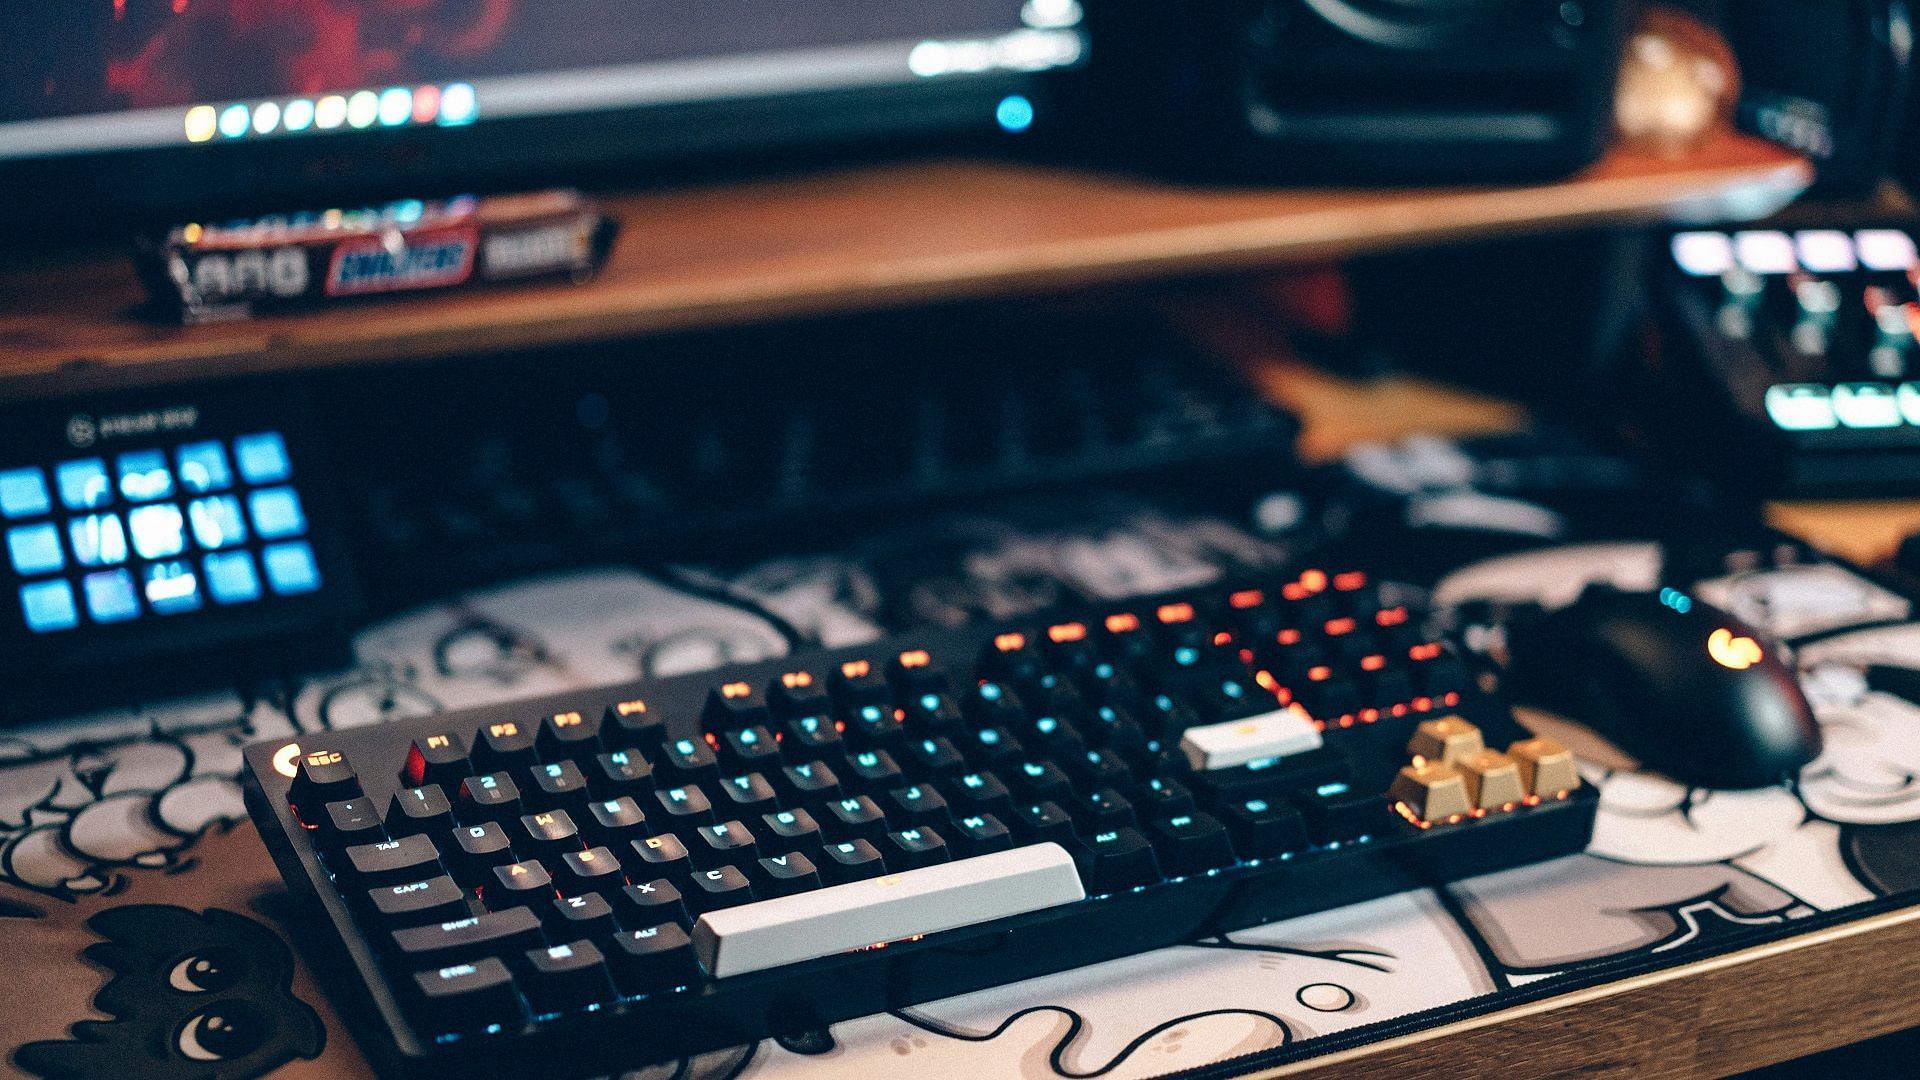 Hardcore gaming setup with mechanical keyboard and mouse (Image via Kadyn Pierce/Unsplash)